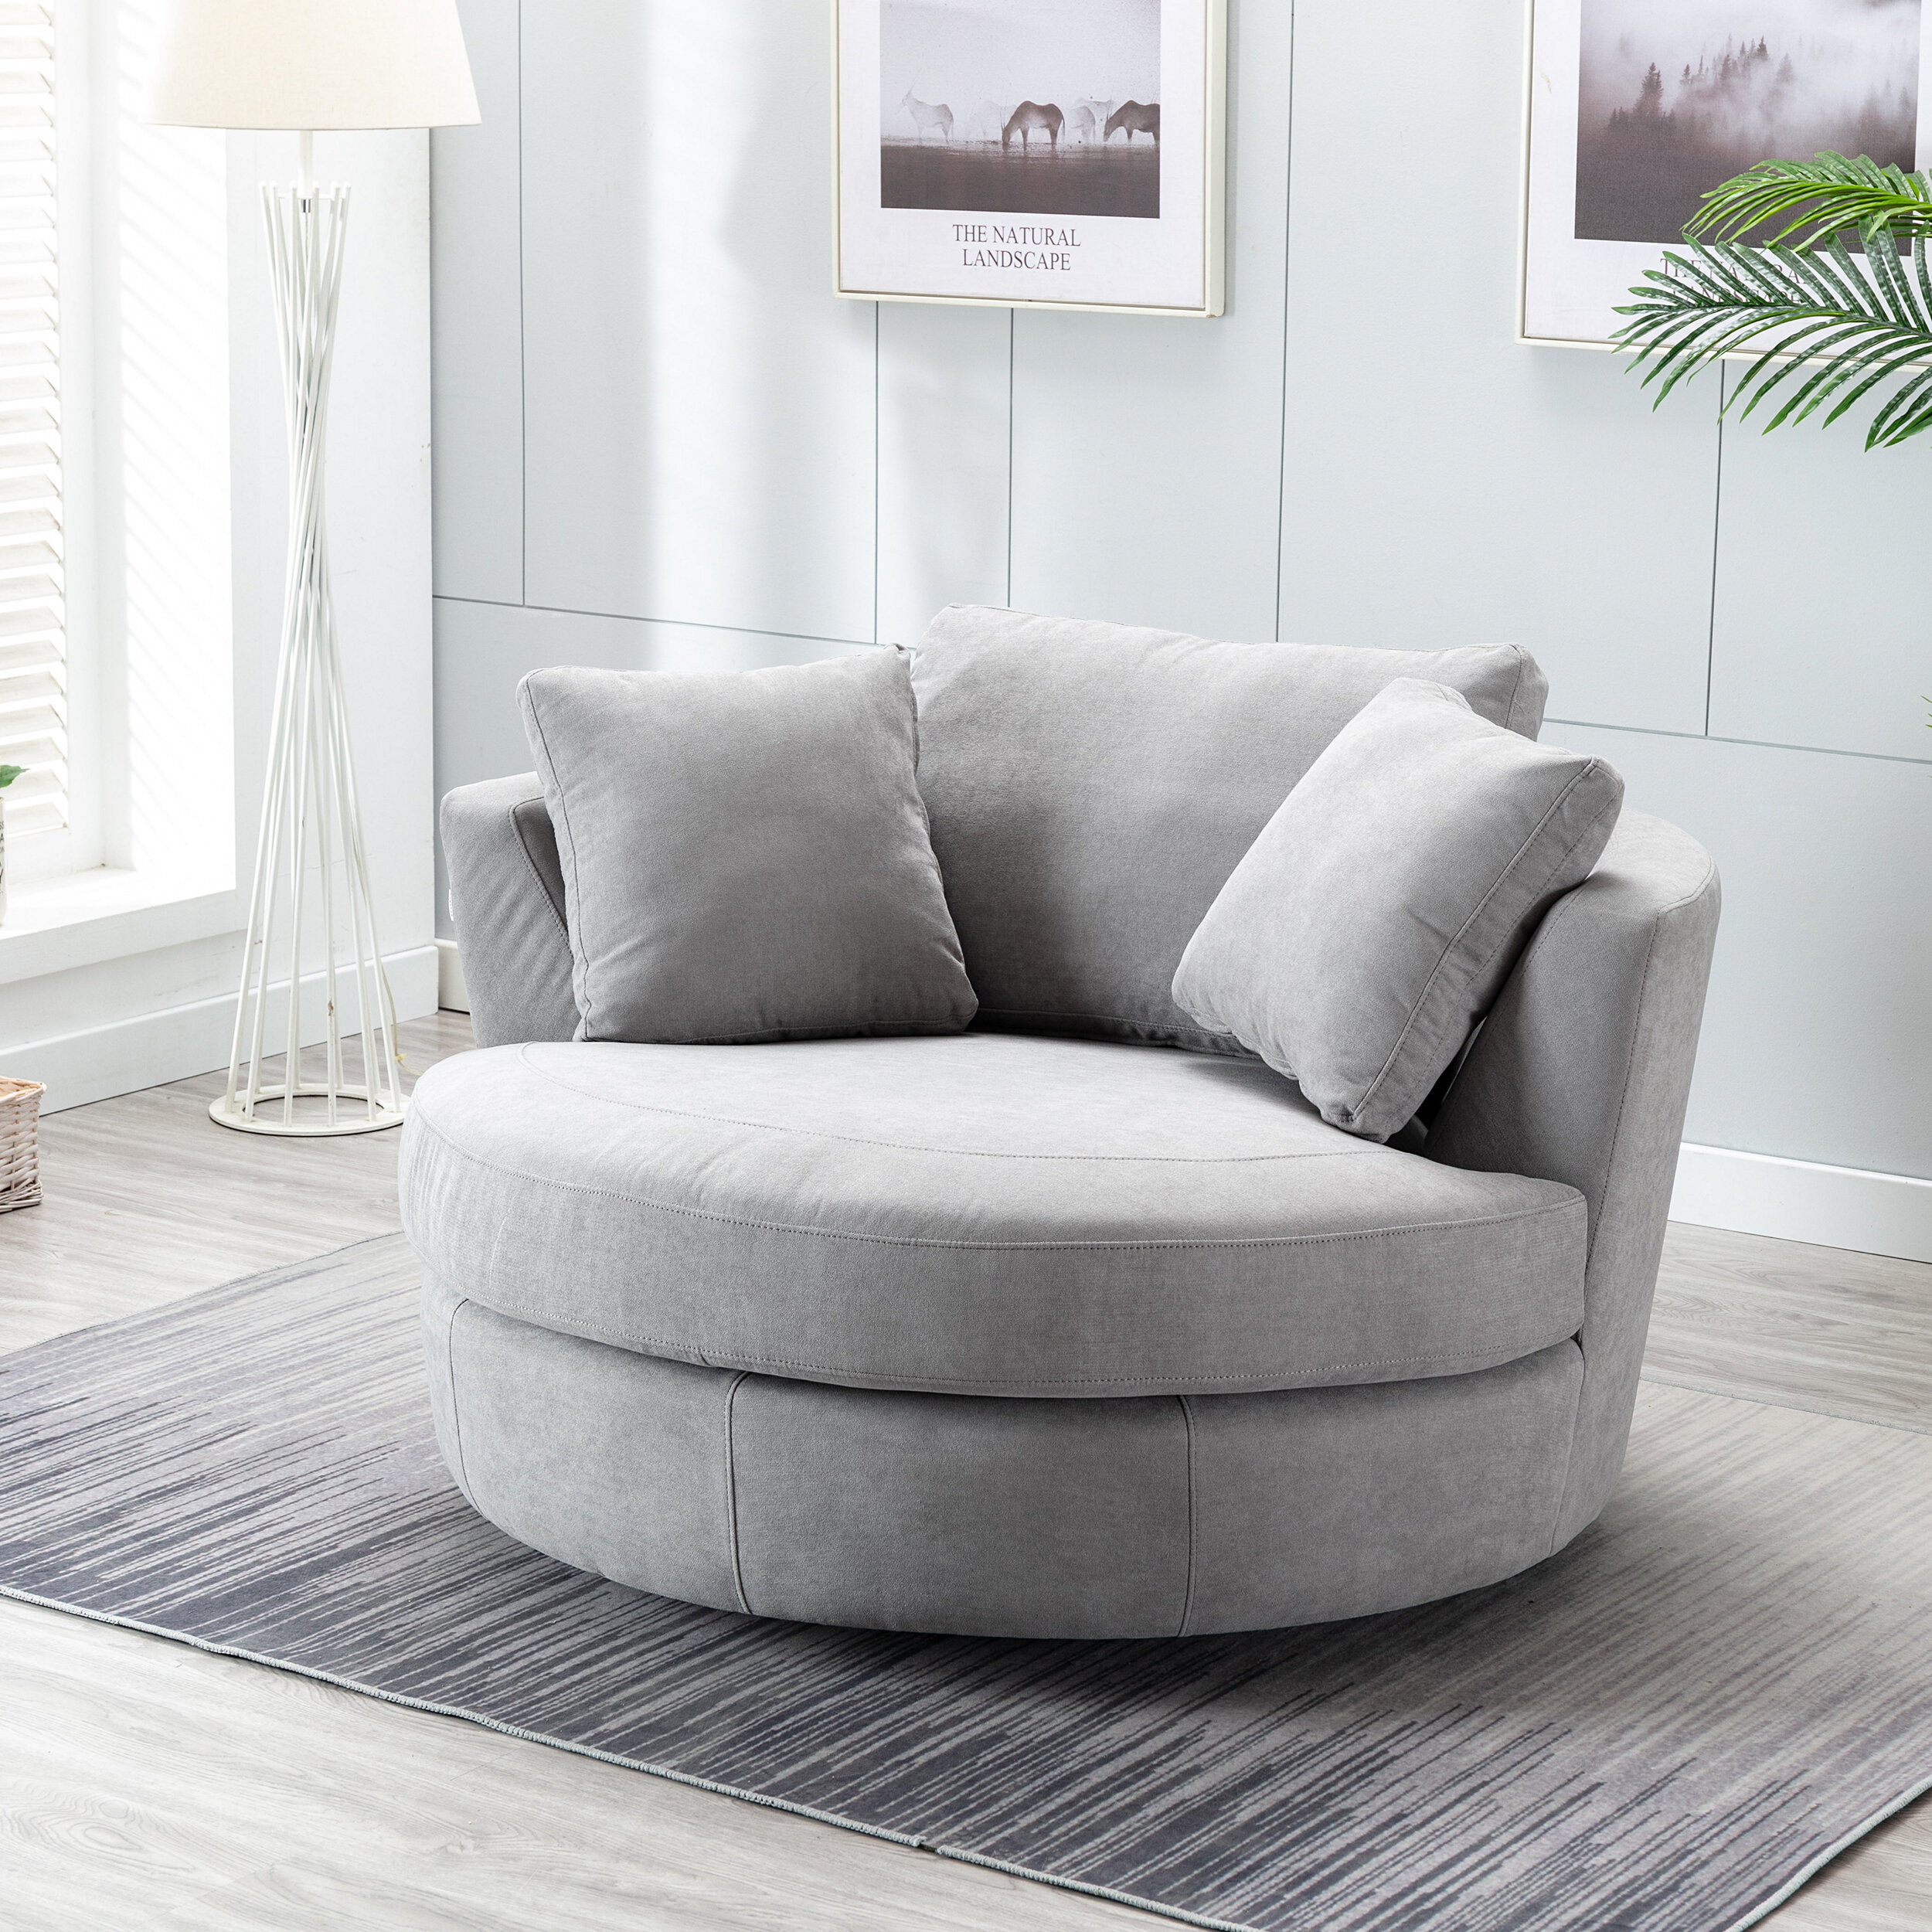 Round Swivel Chair Visualhunt, Round Swivel Arm Chairs Living Room